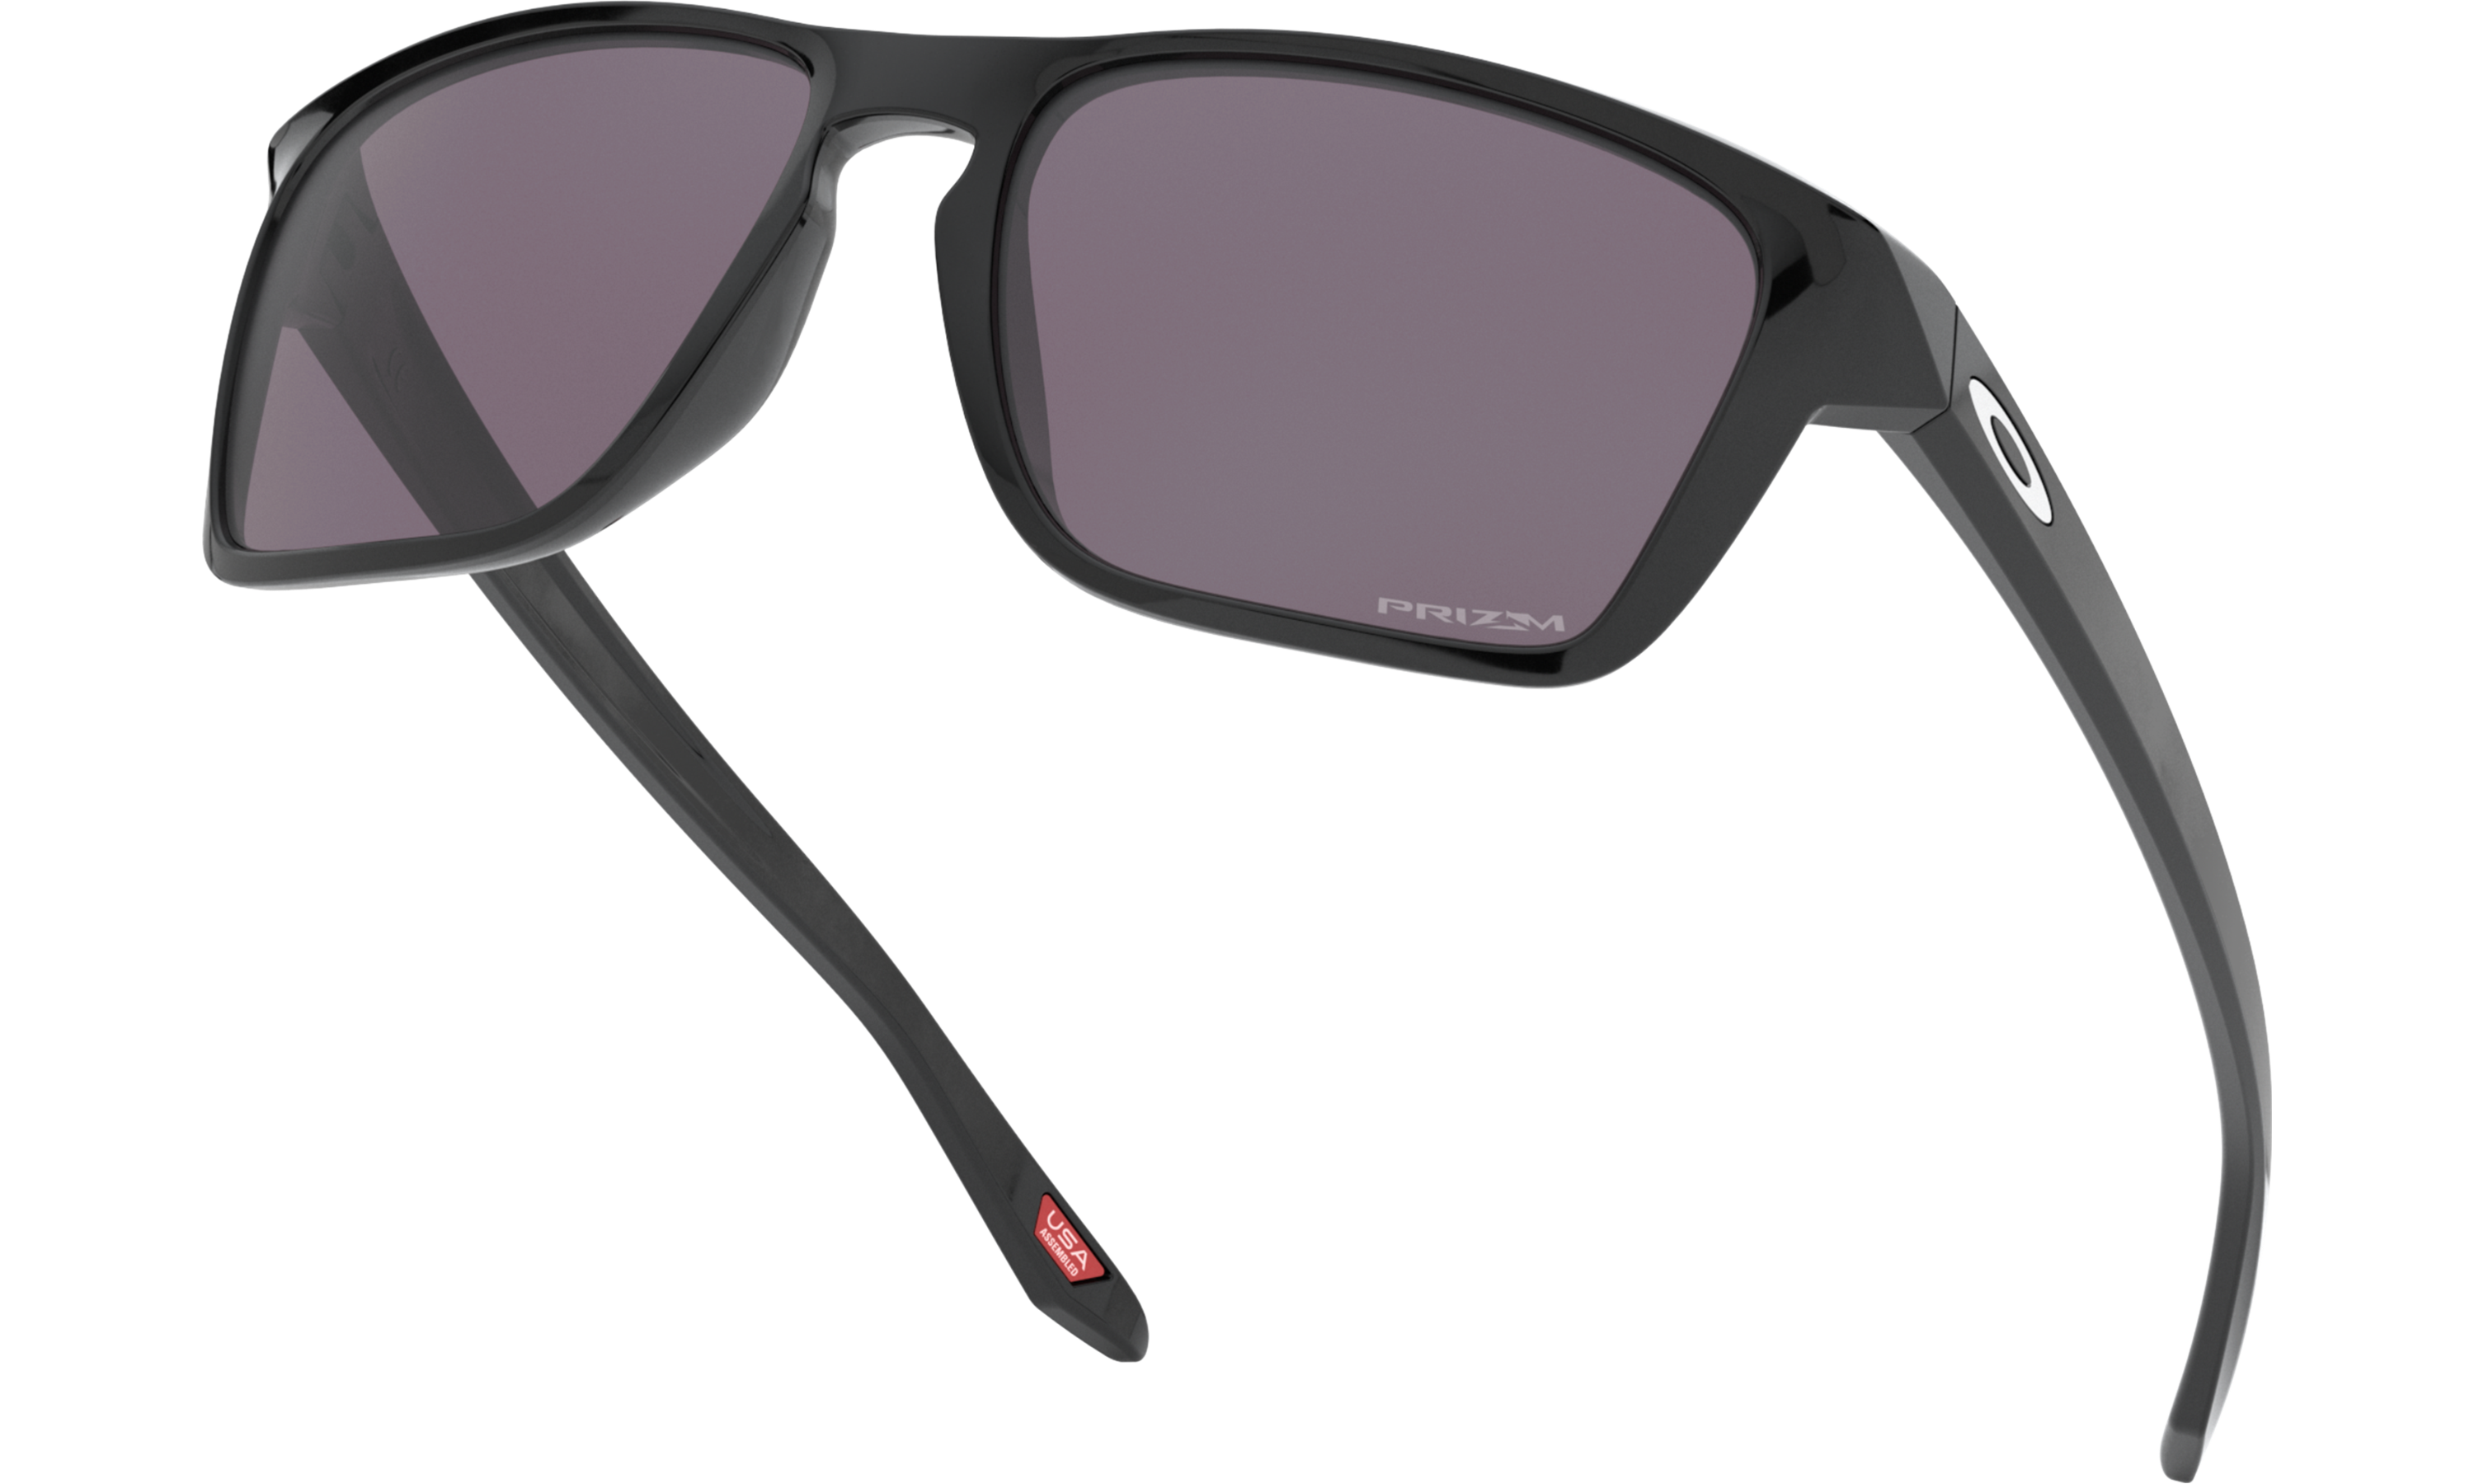 oakley sunglasses model number